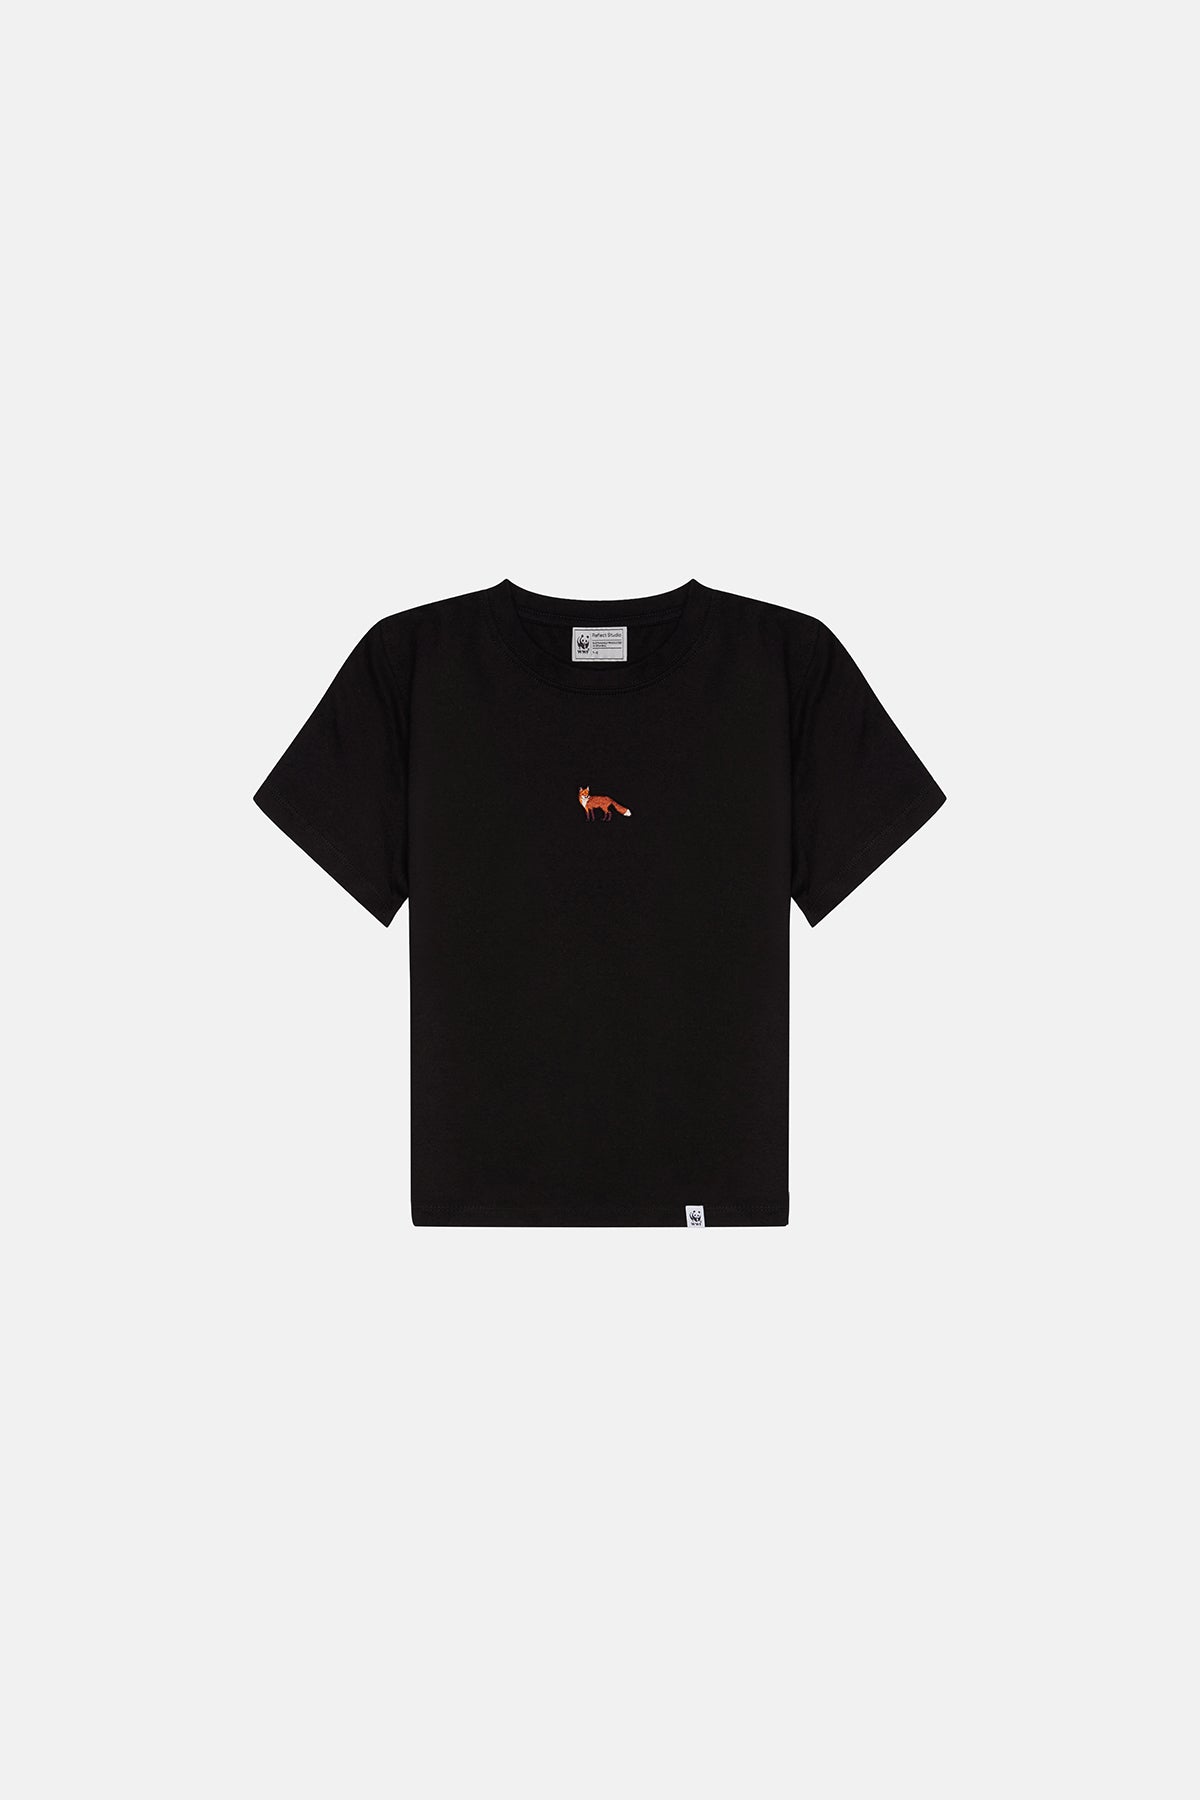 Kızıl Tilki Supreme Çocuk T-shirt - Siyah